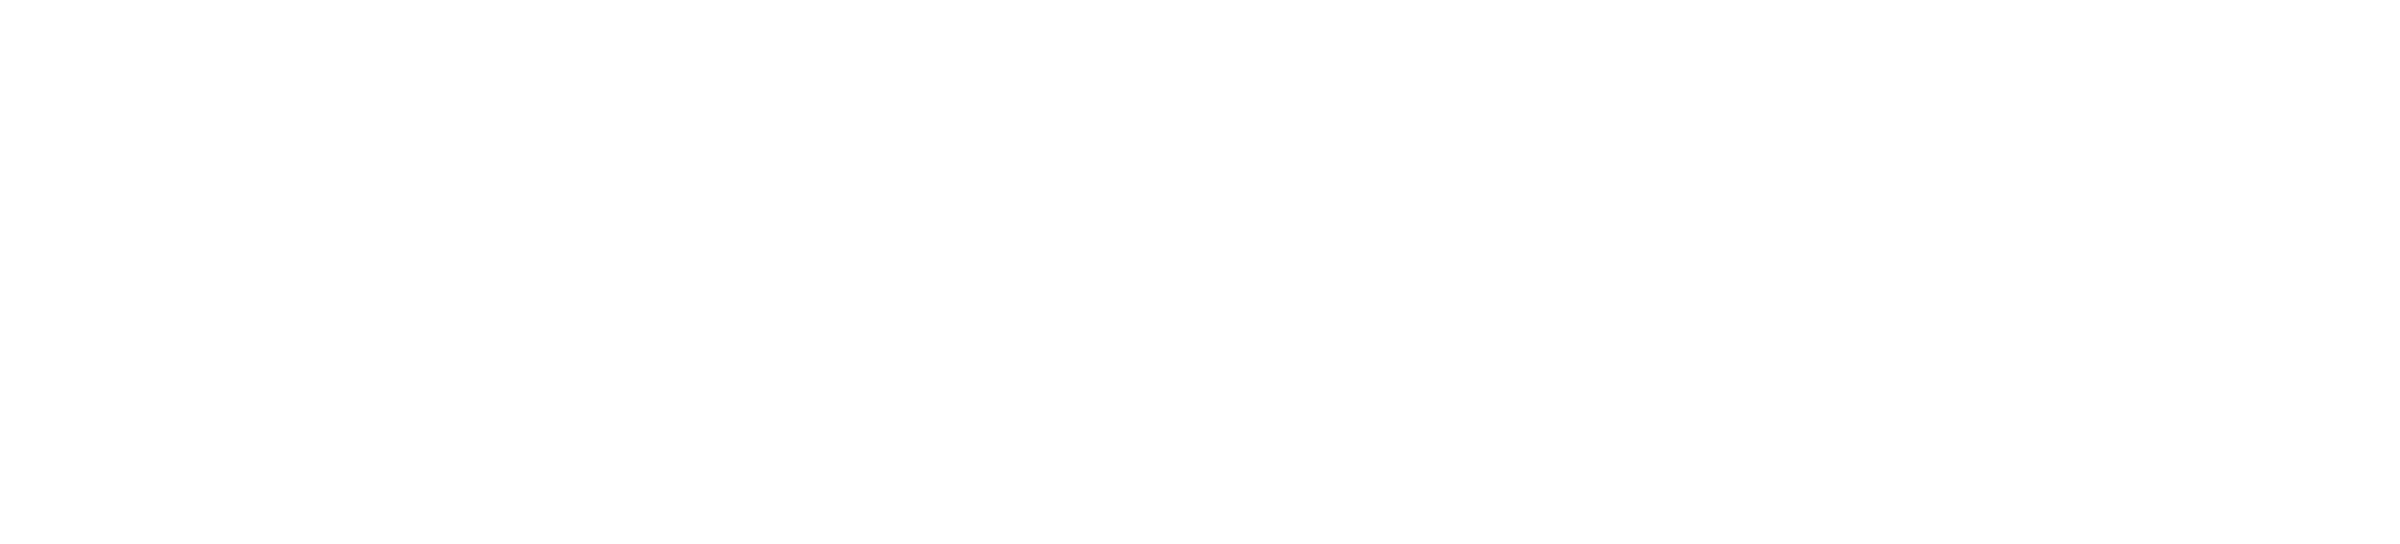 Ticketebo logo